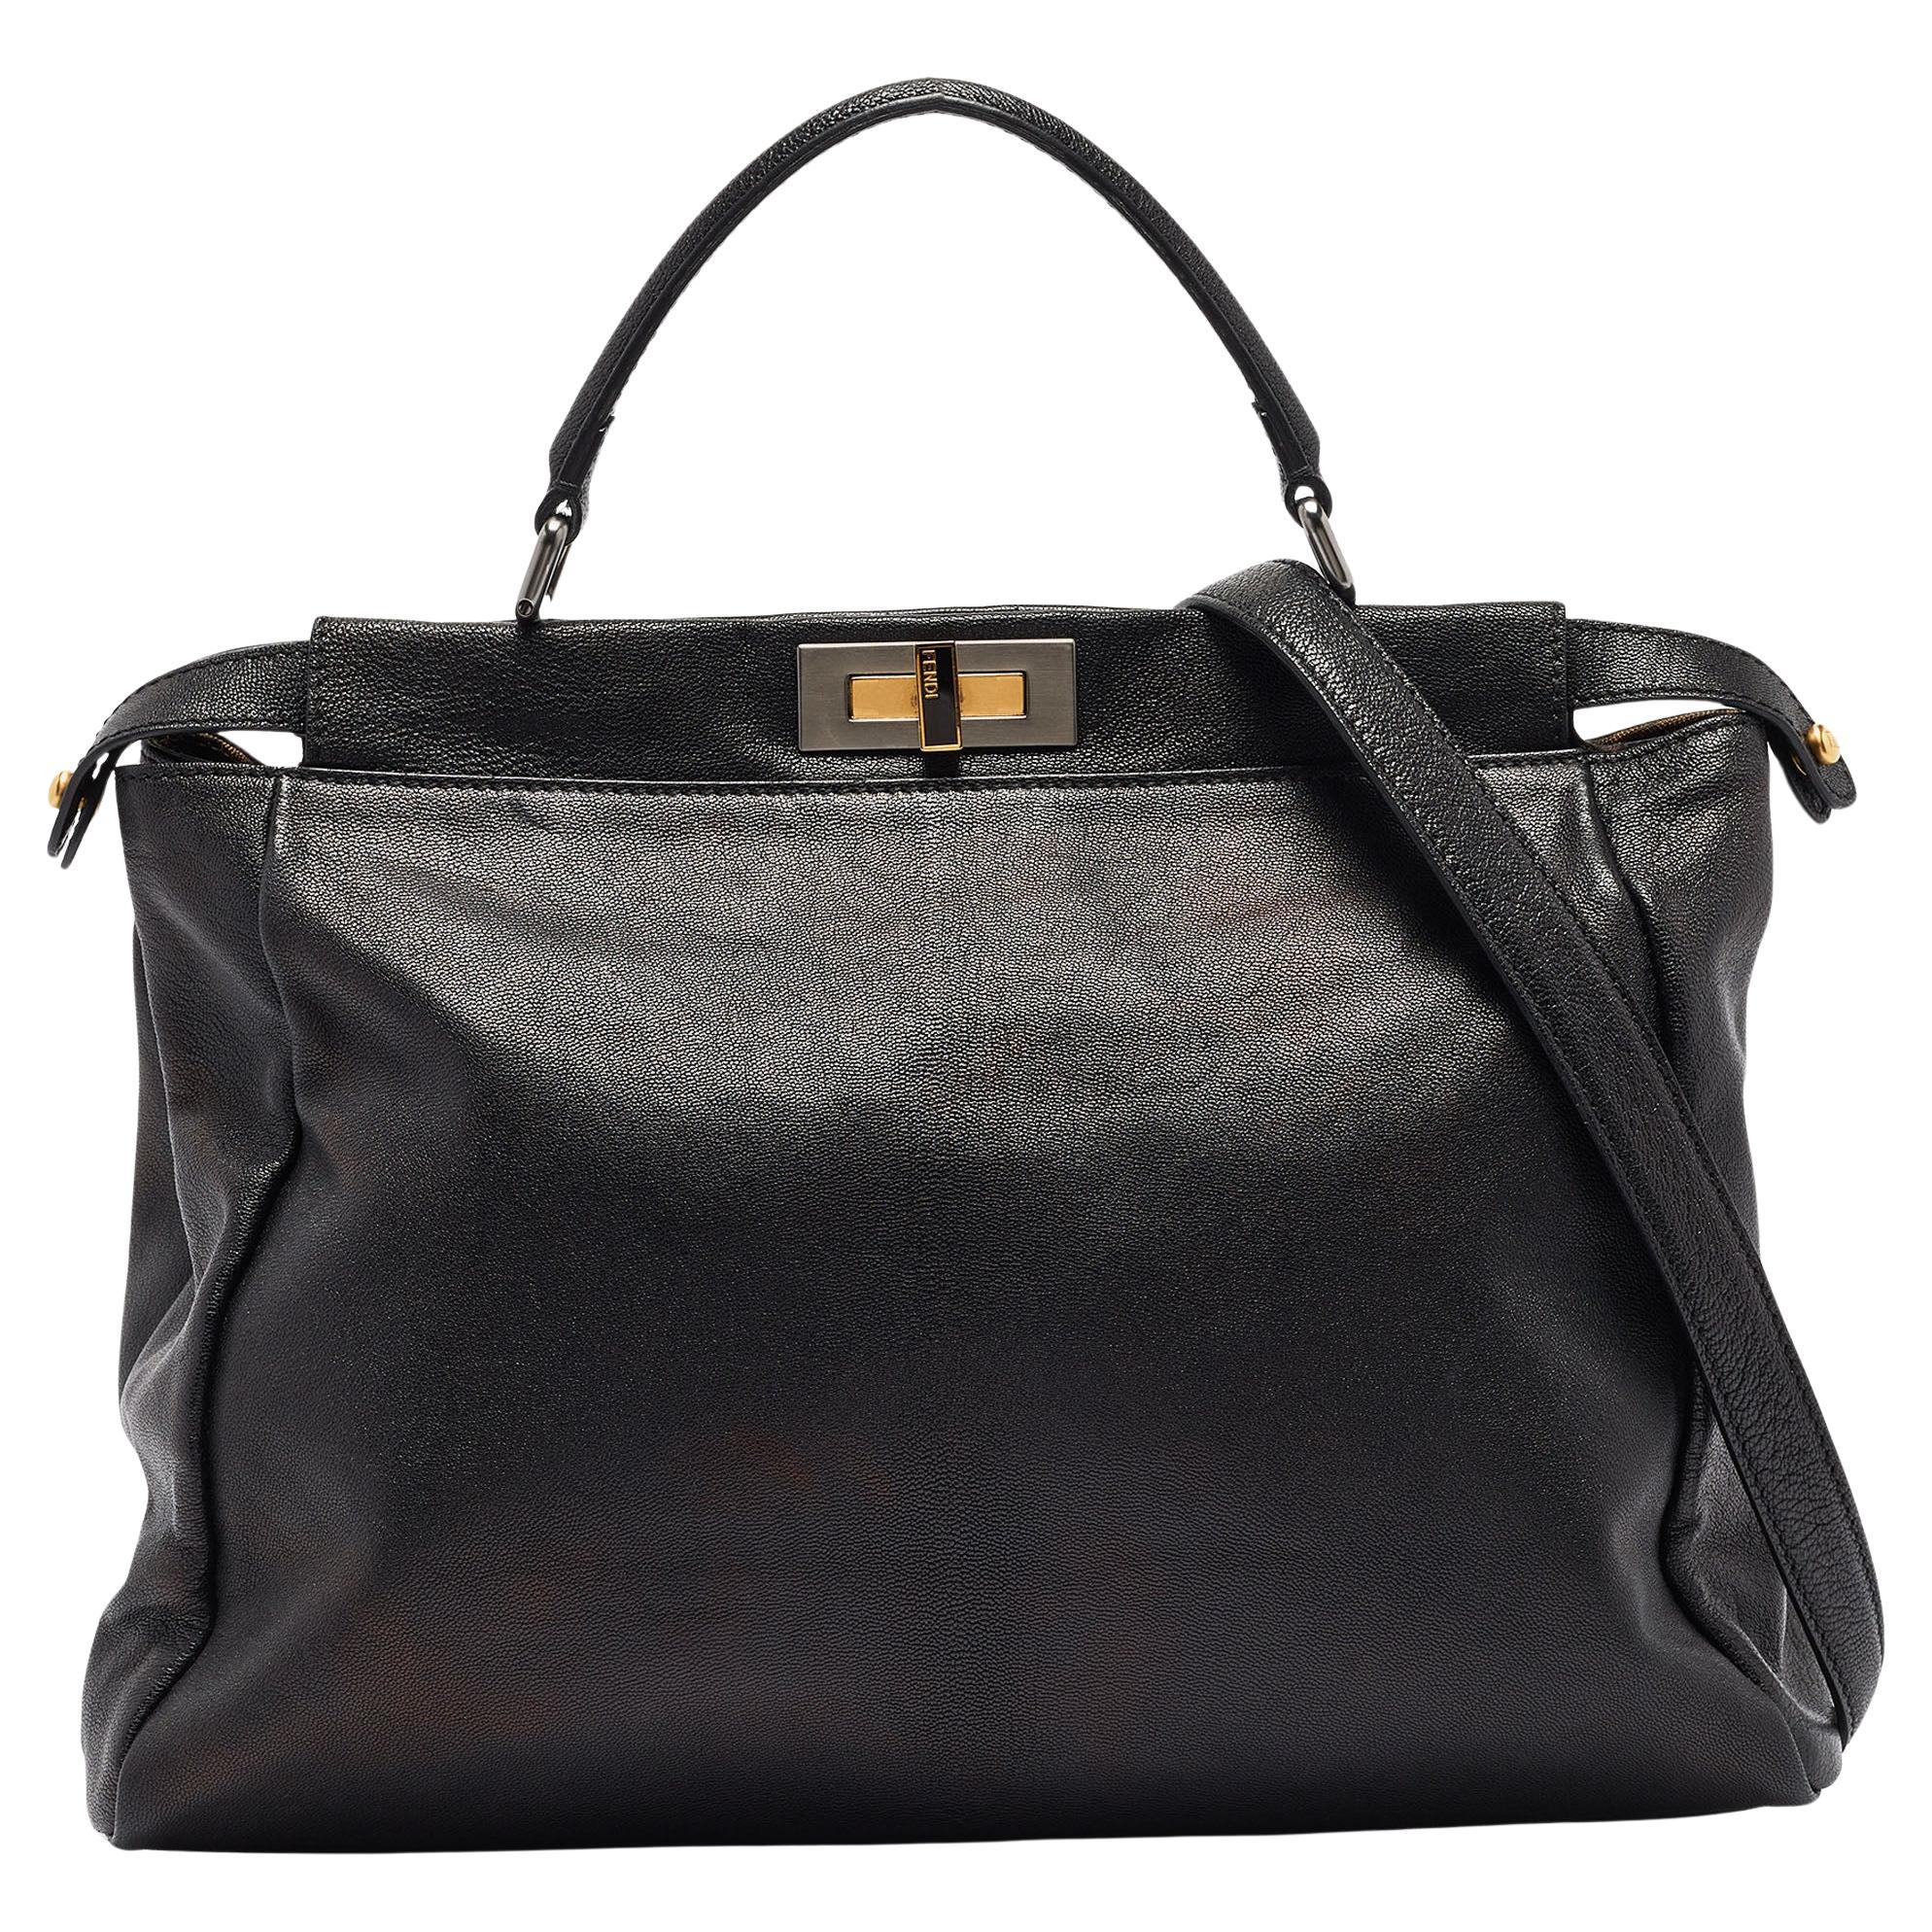 Fendi - Grand sac en cuir noir Peekaboo à poignée supérieure en vente